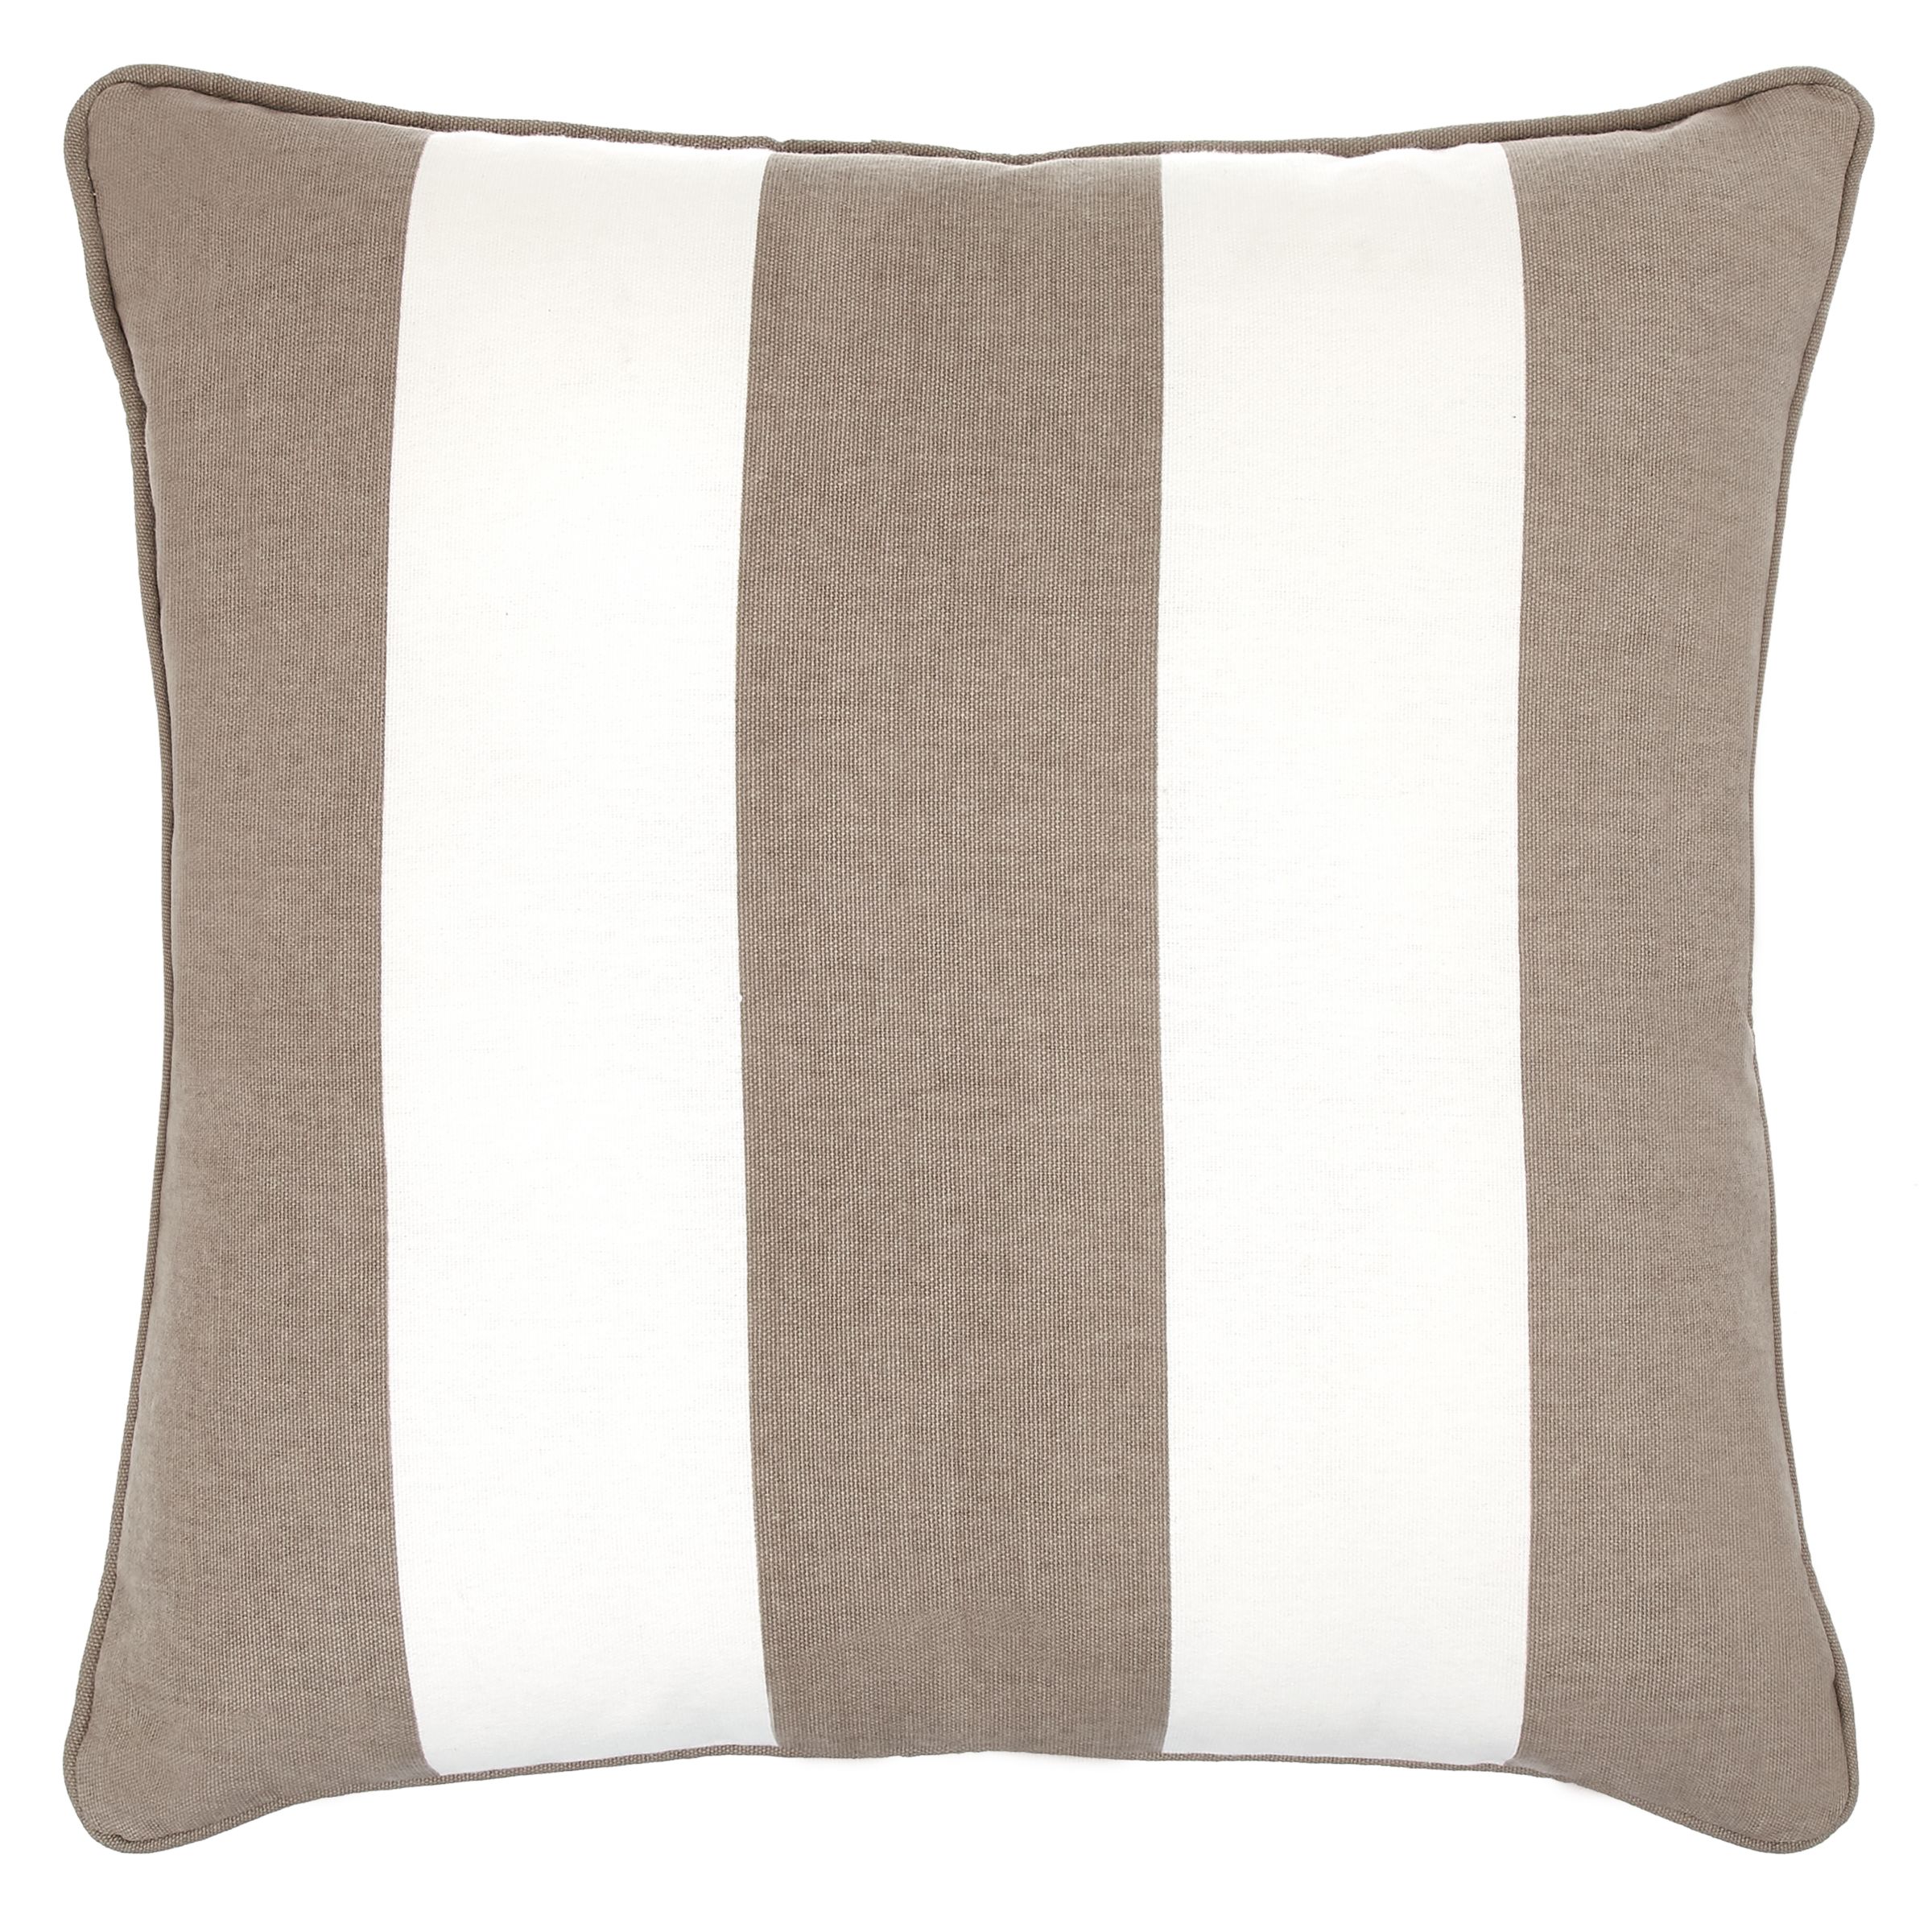 John Lewis & Partners Mix 'N' Match Stripe Reversible Showerproof Outdoor Cushion